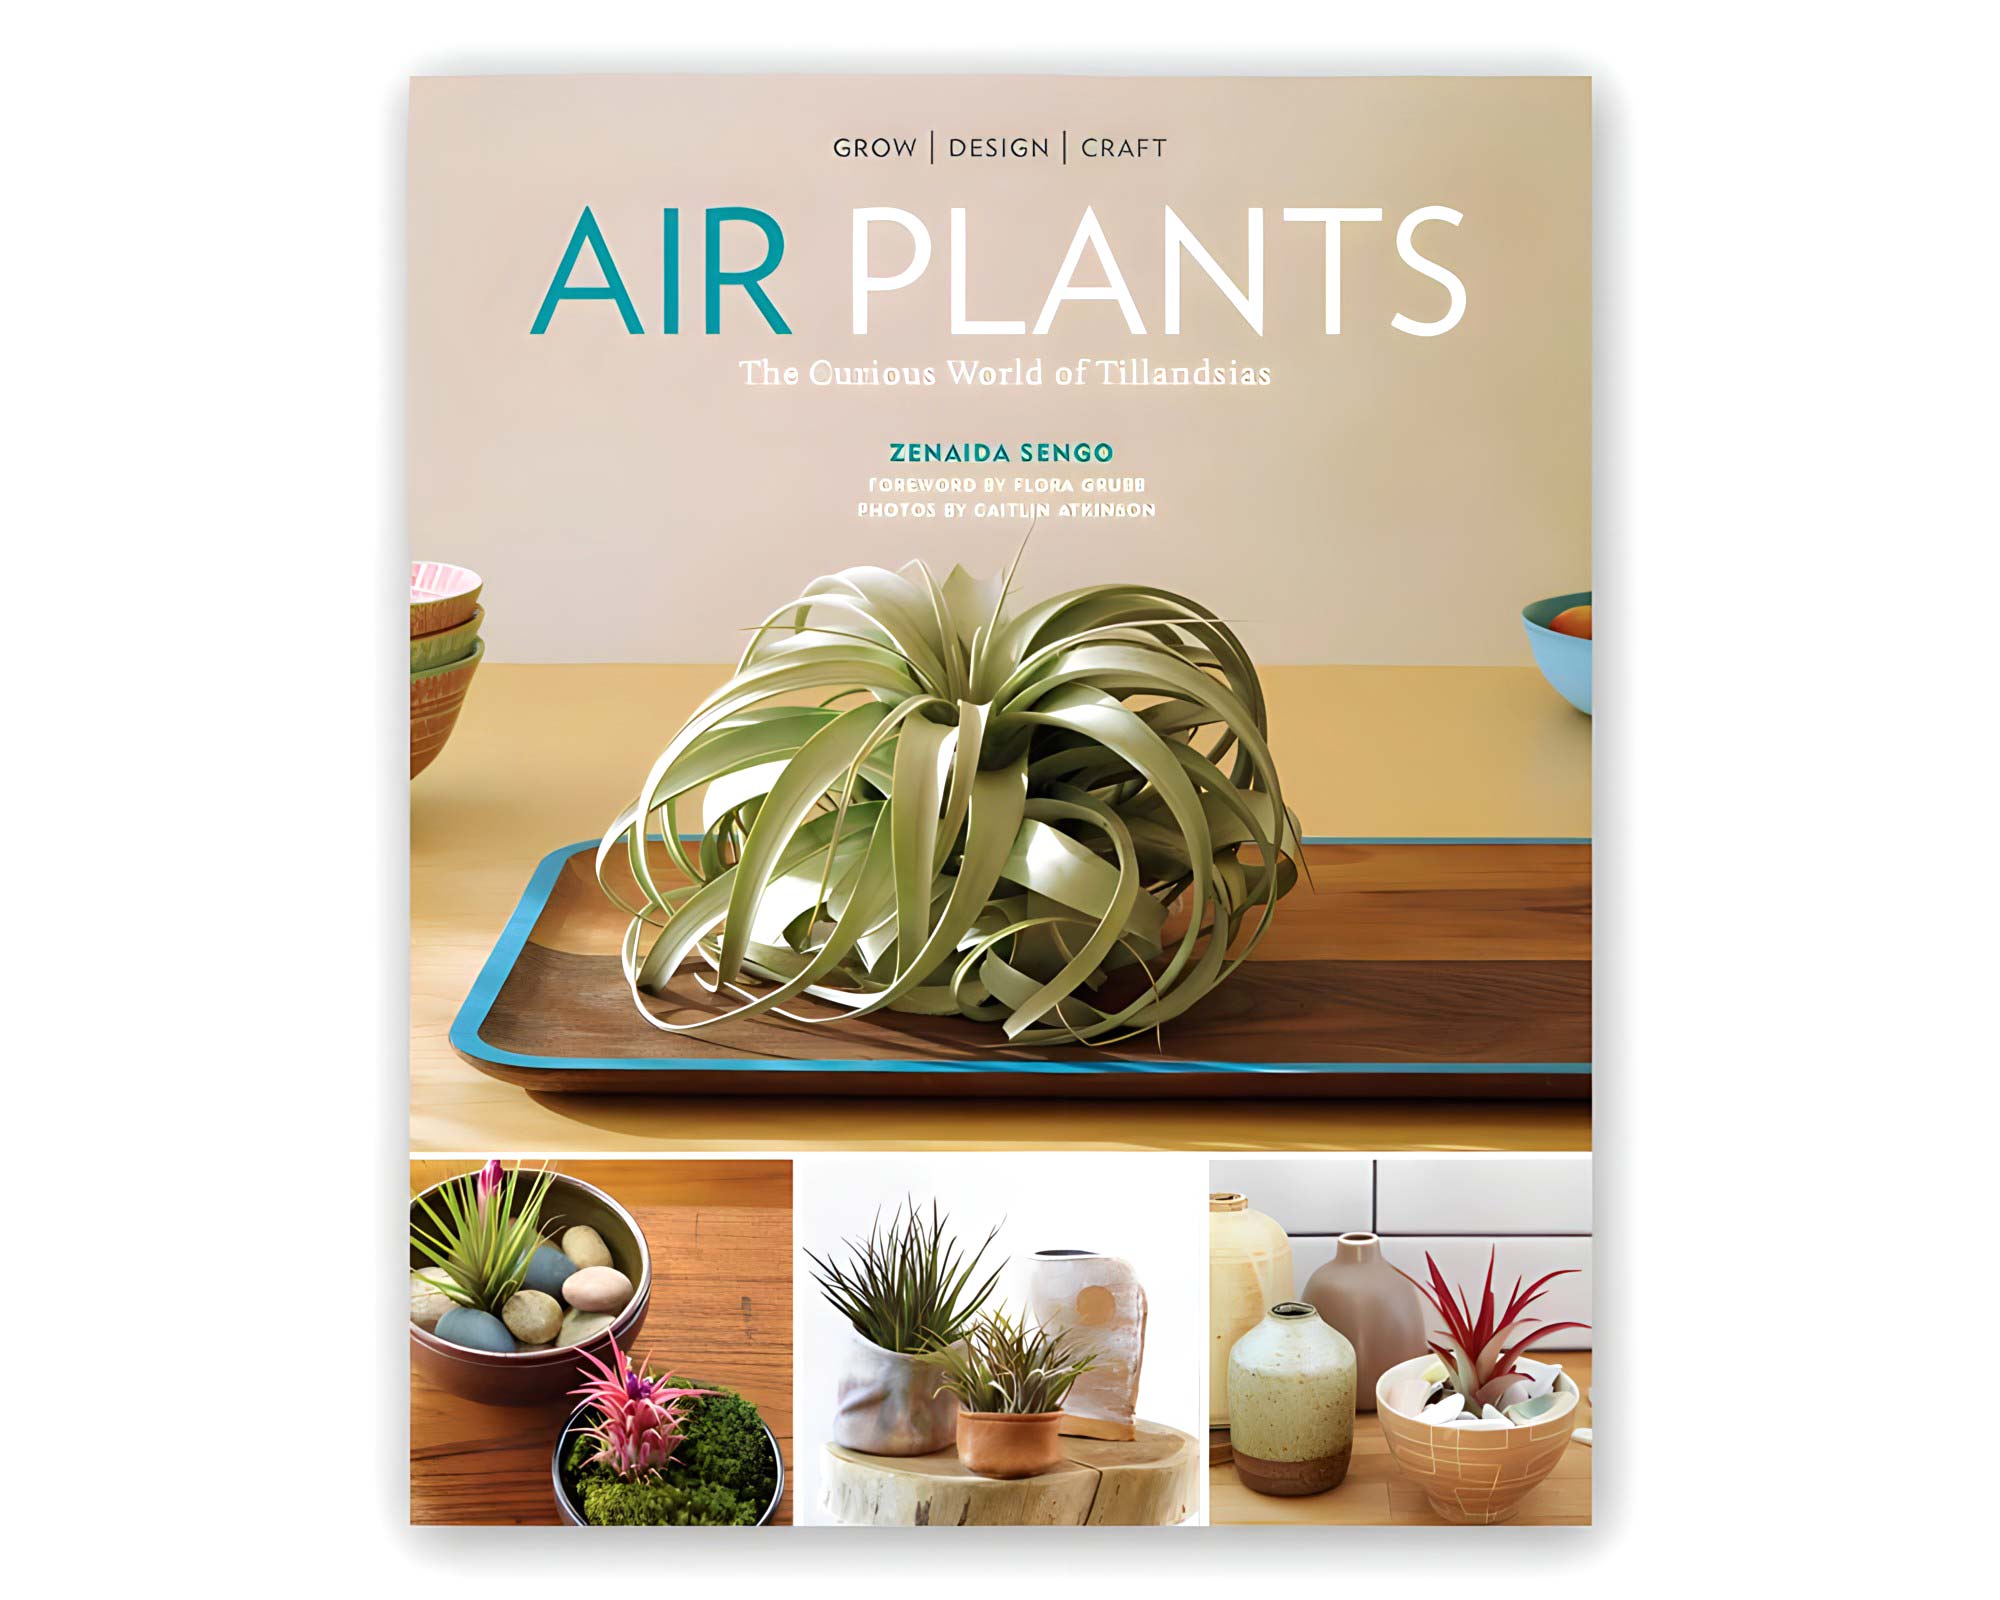 Air Plants - The Curious World of Tillandsias by Zenaida Sengo